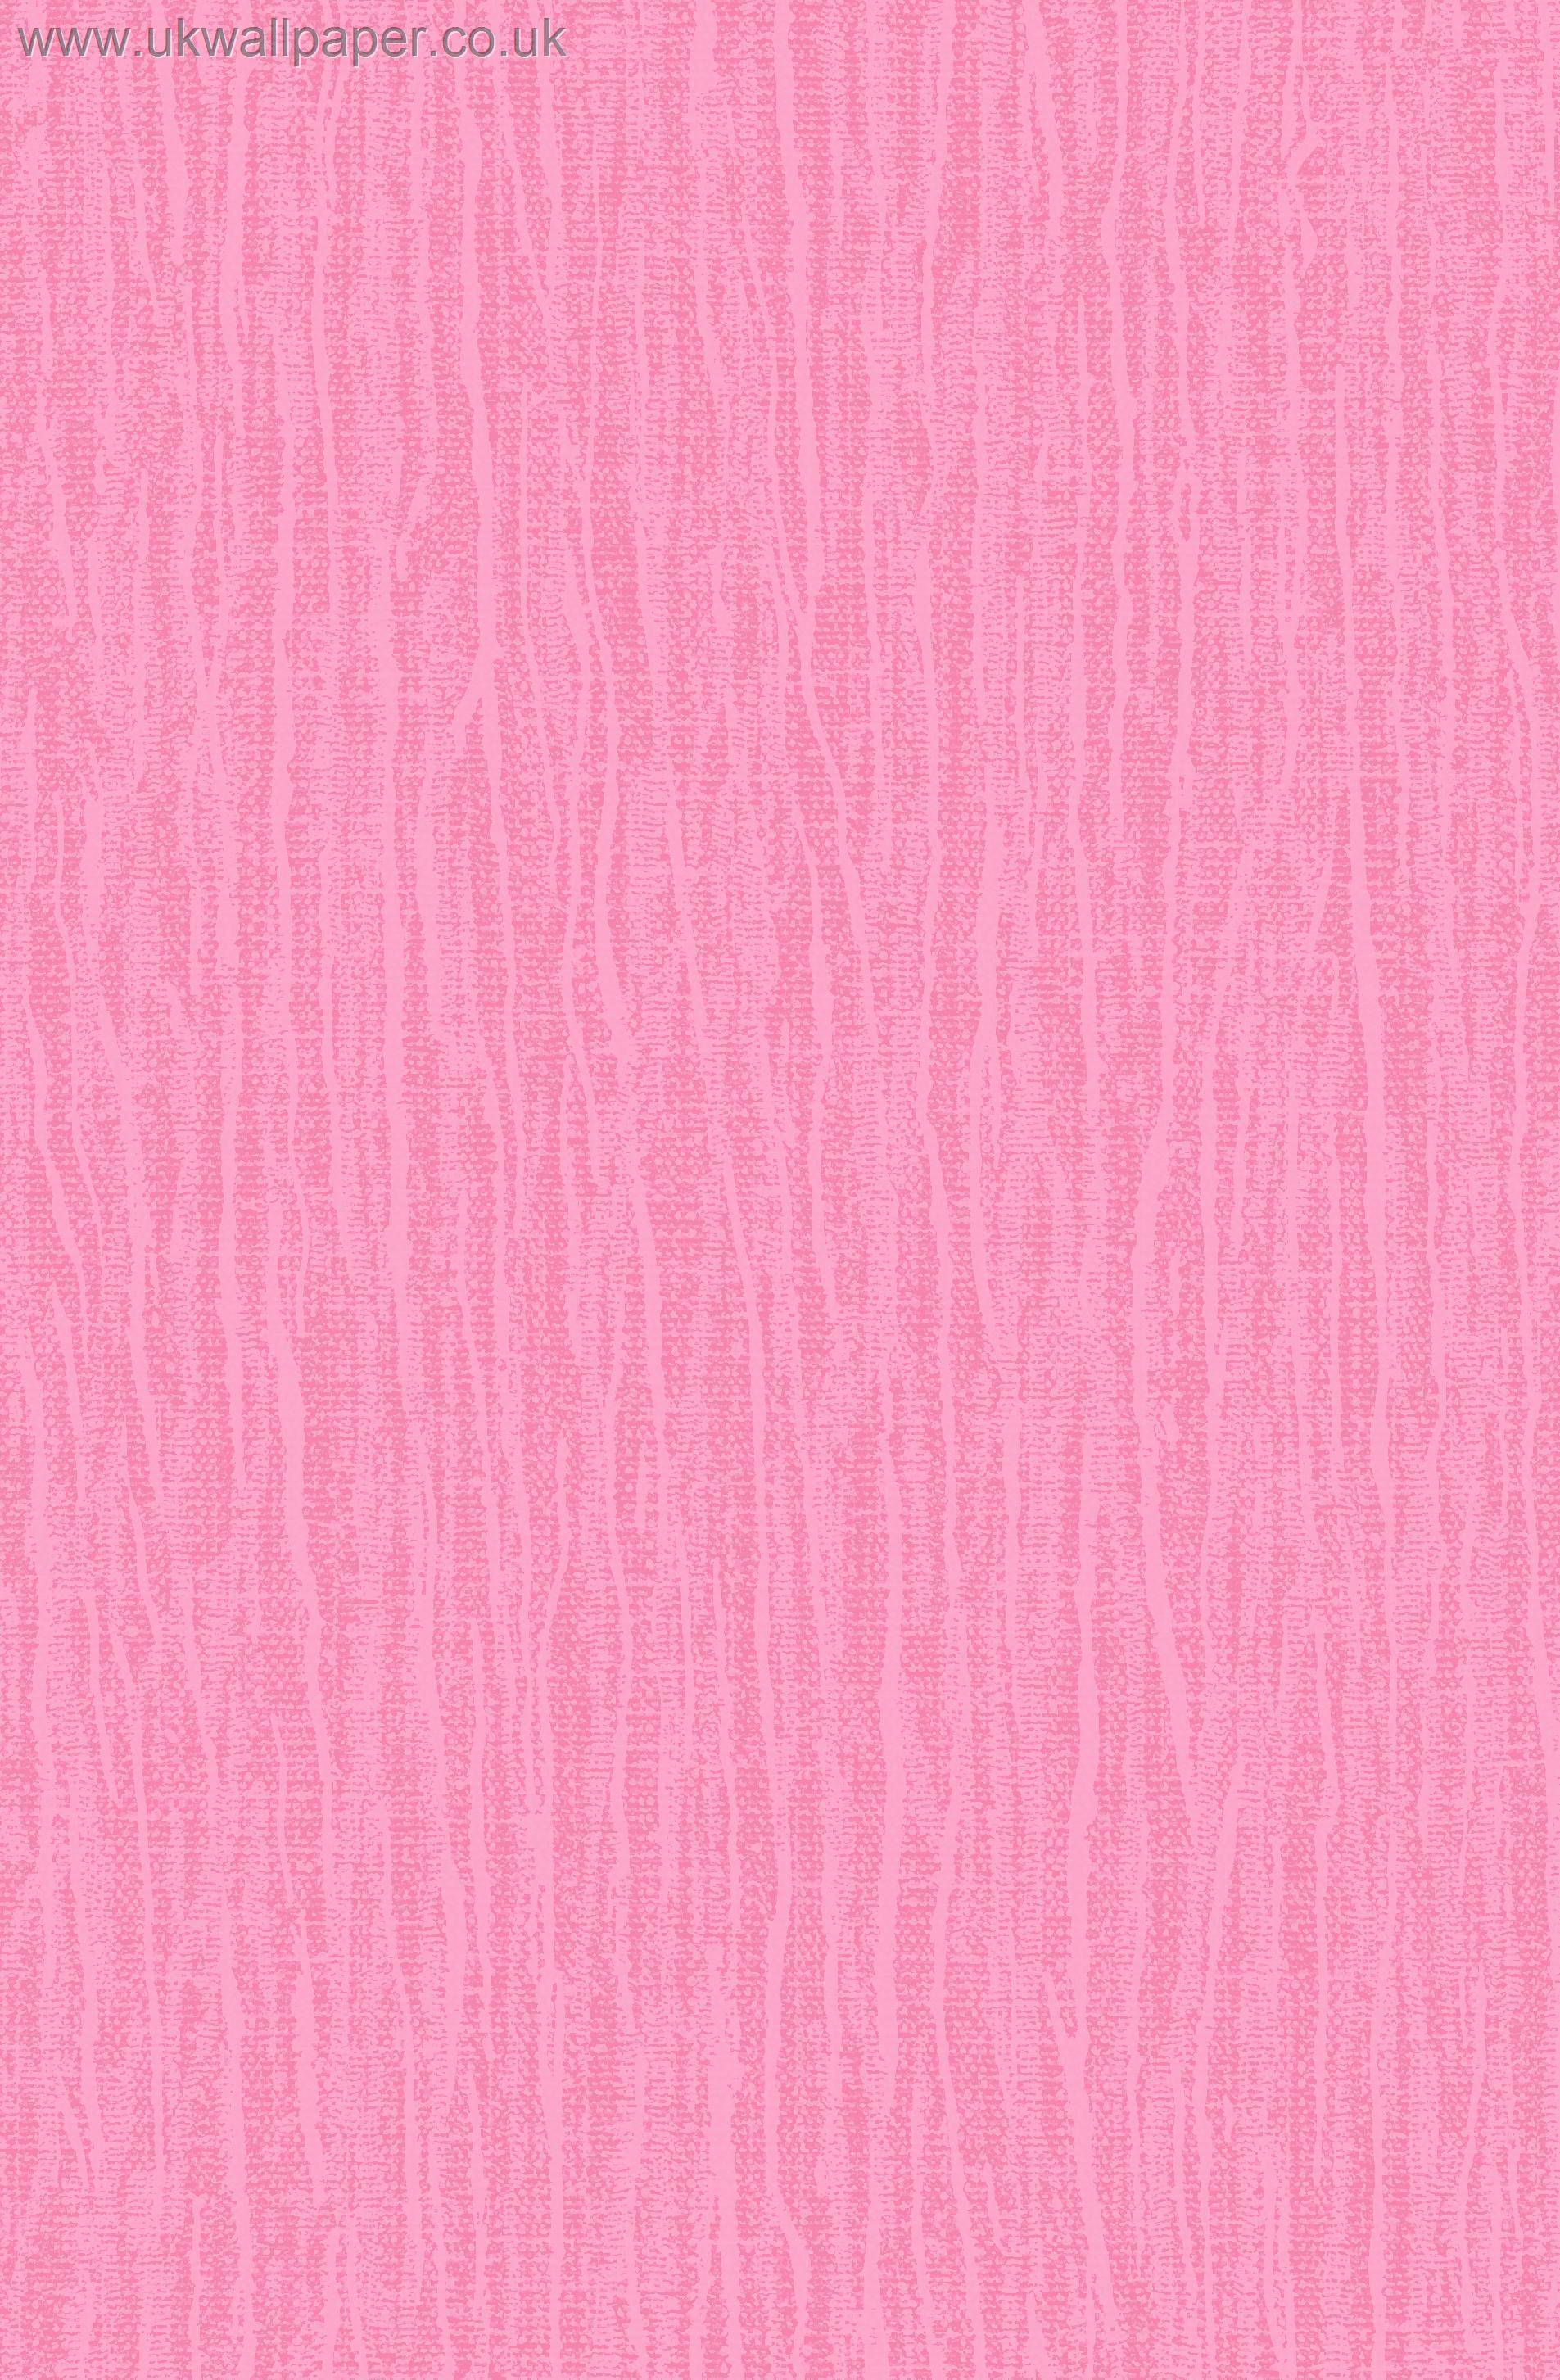 Plain Pink Wallpaper, Desktop Background 1905x2906 px for PC & Mac